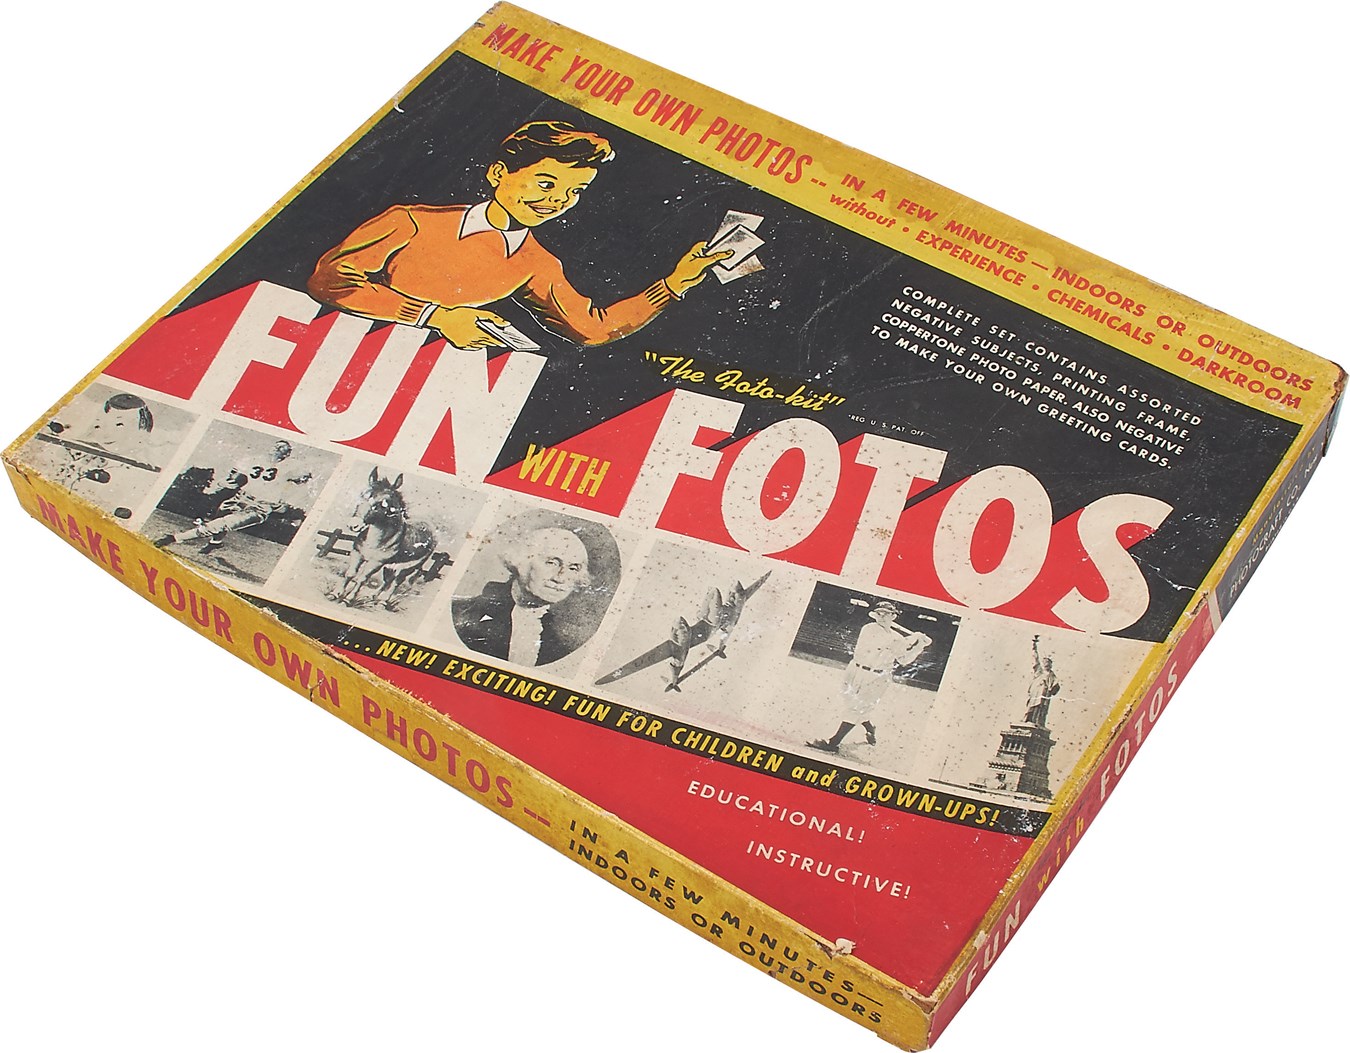 1940s "Fun With Fotos" Game with Joe DiMaggio Card - Similar to 1948 Topps Magic Photos